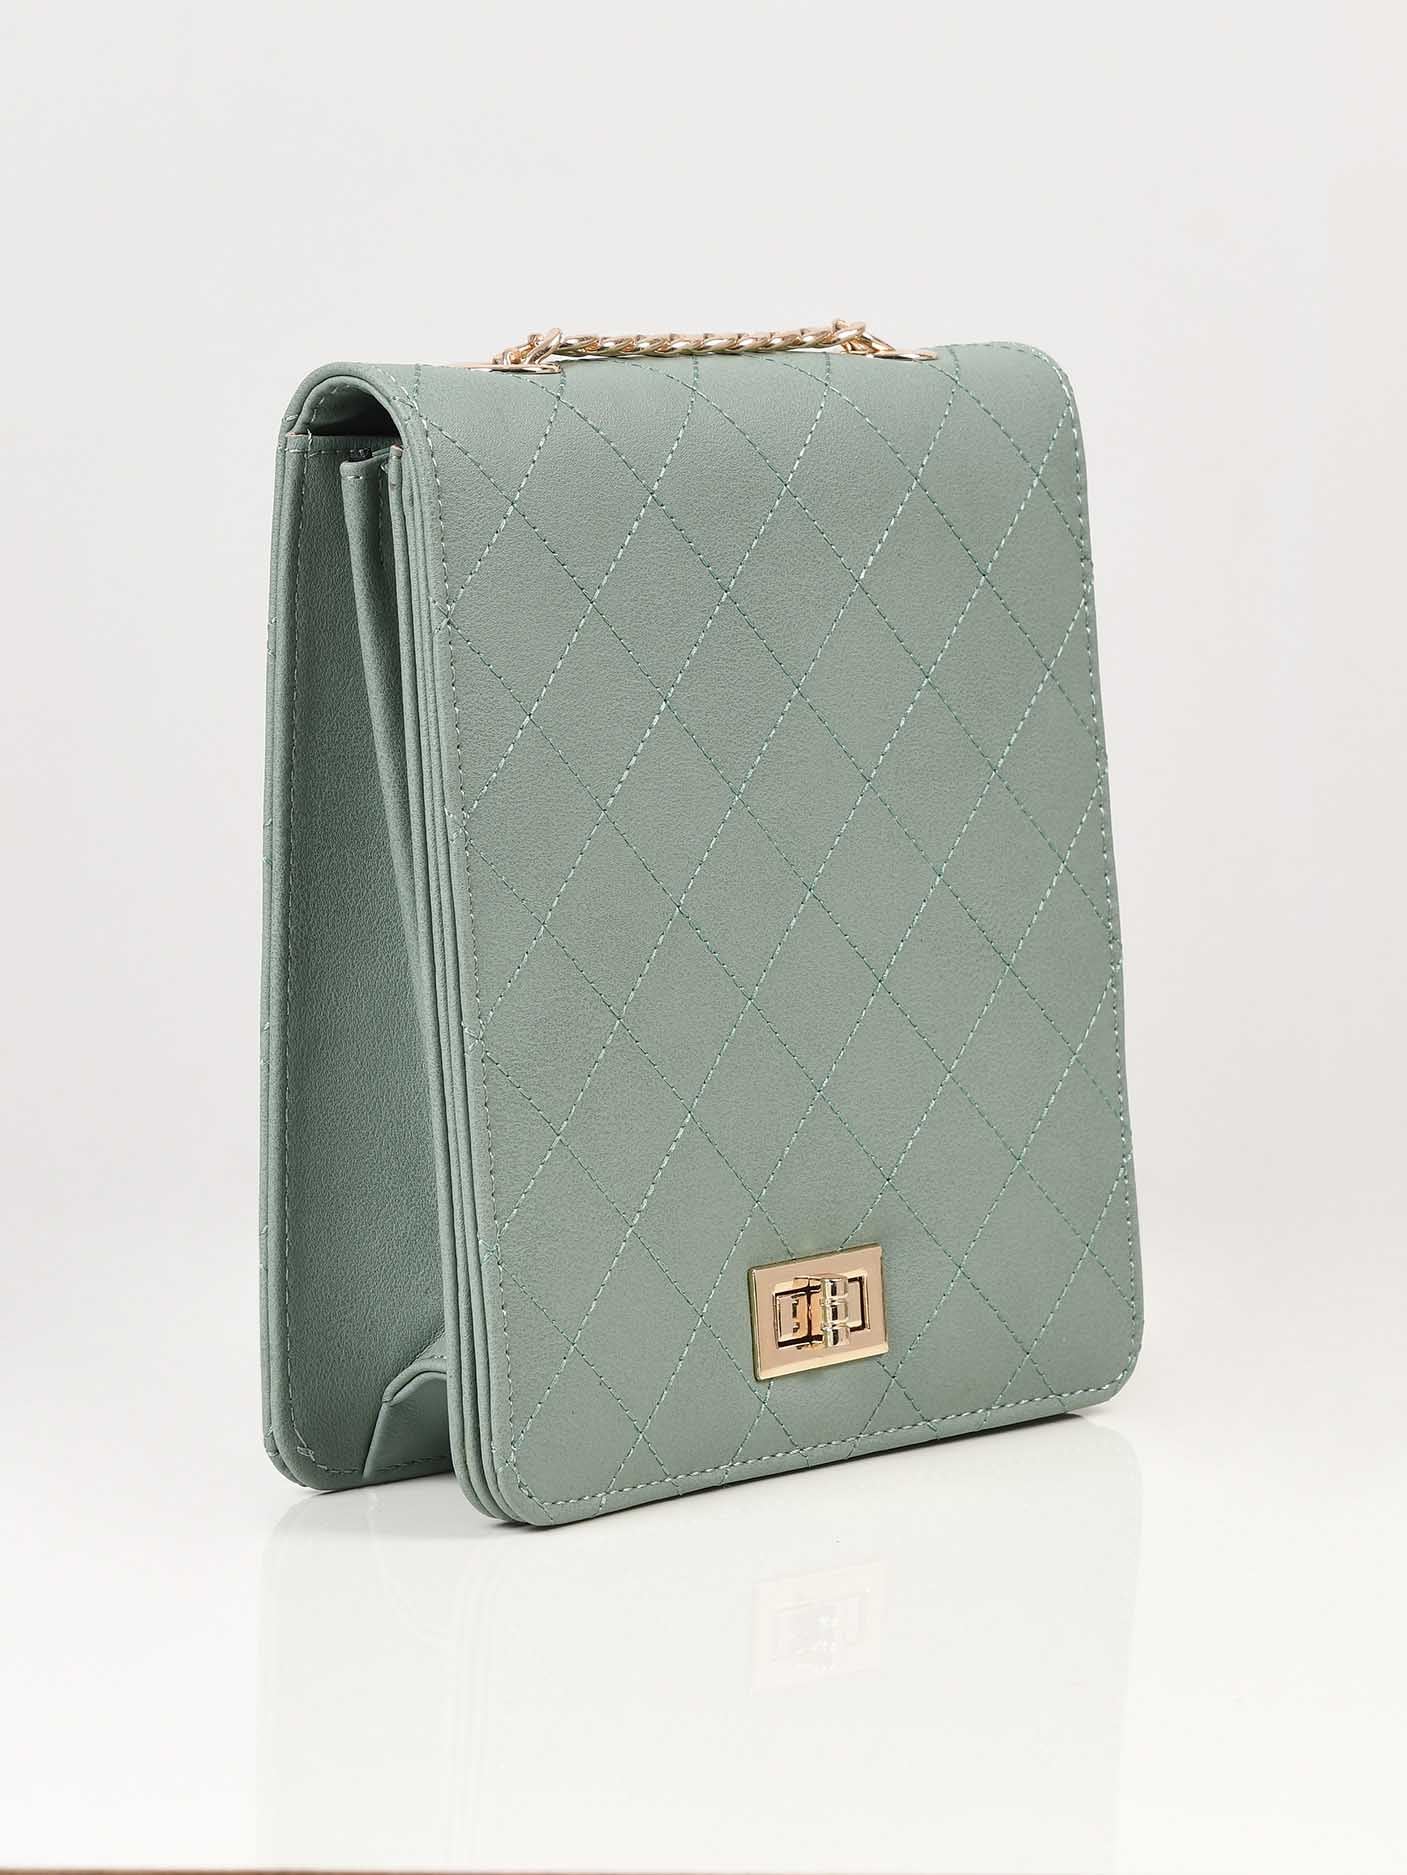 Quilt Design Handbag